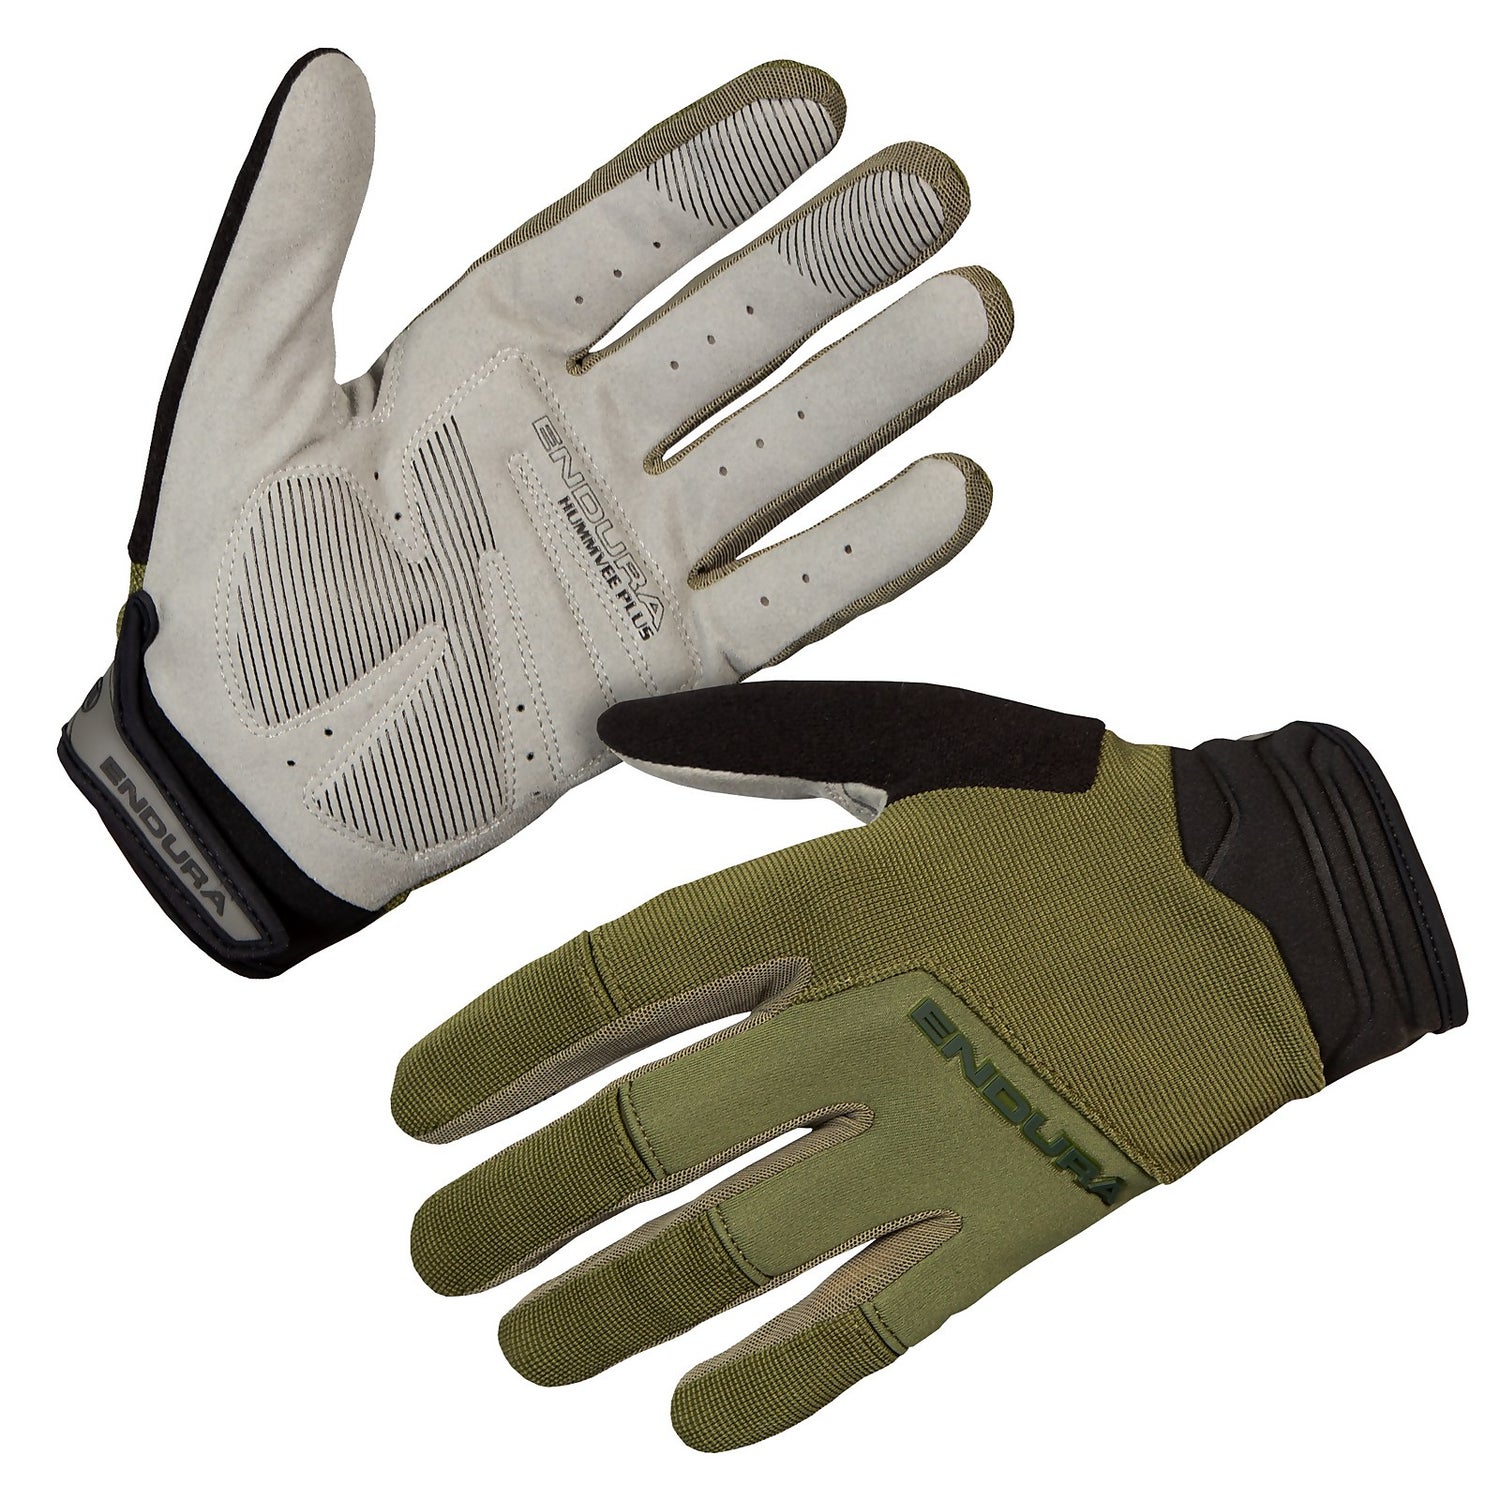 Hummvee Plus Glove II - Olive Green - L